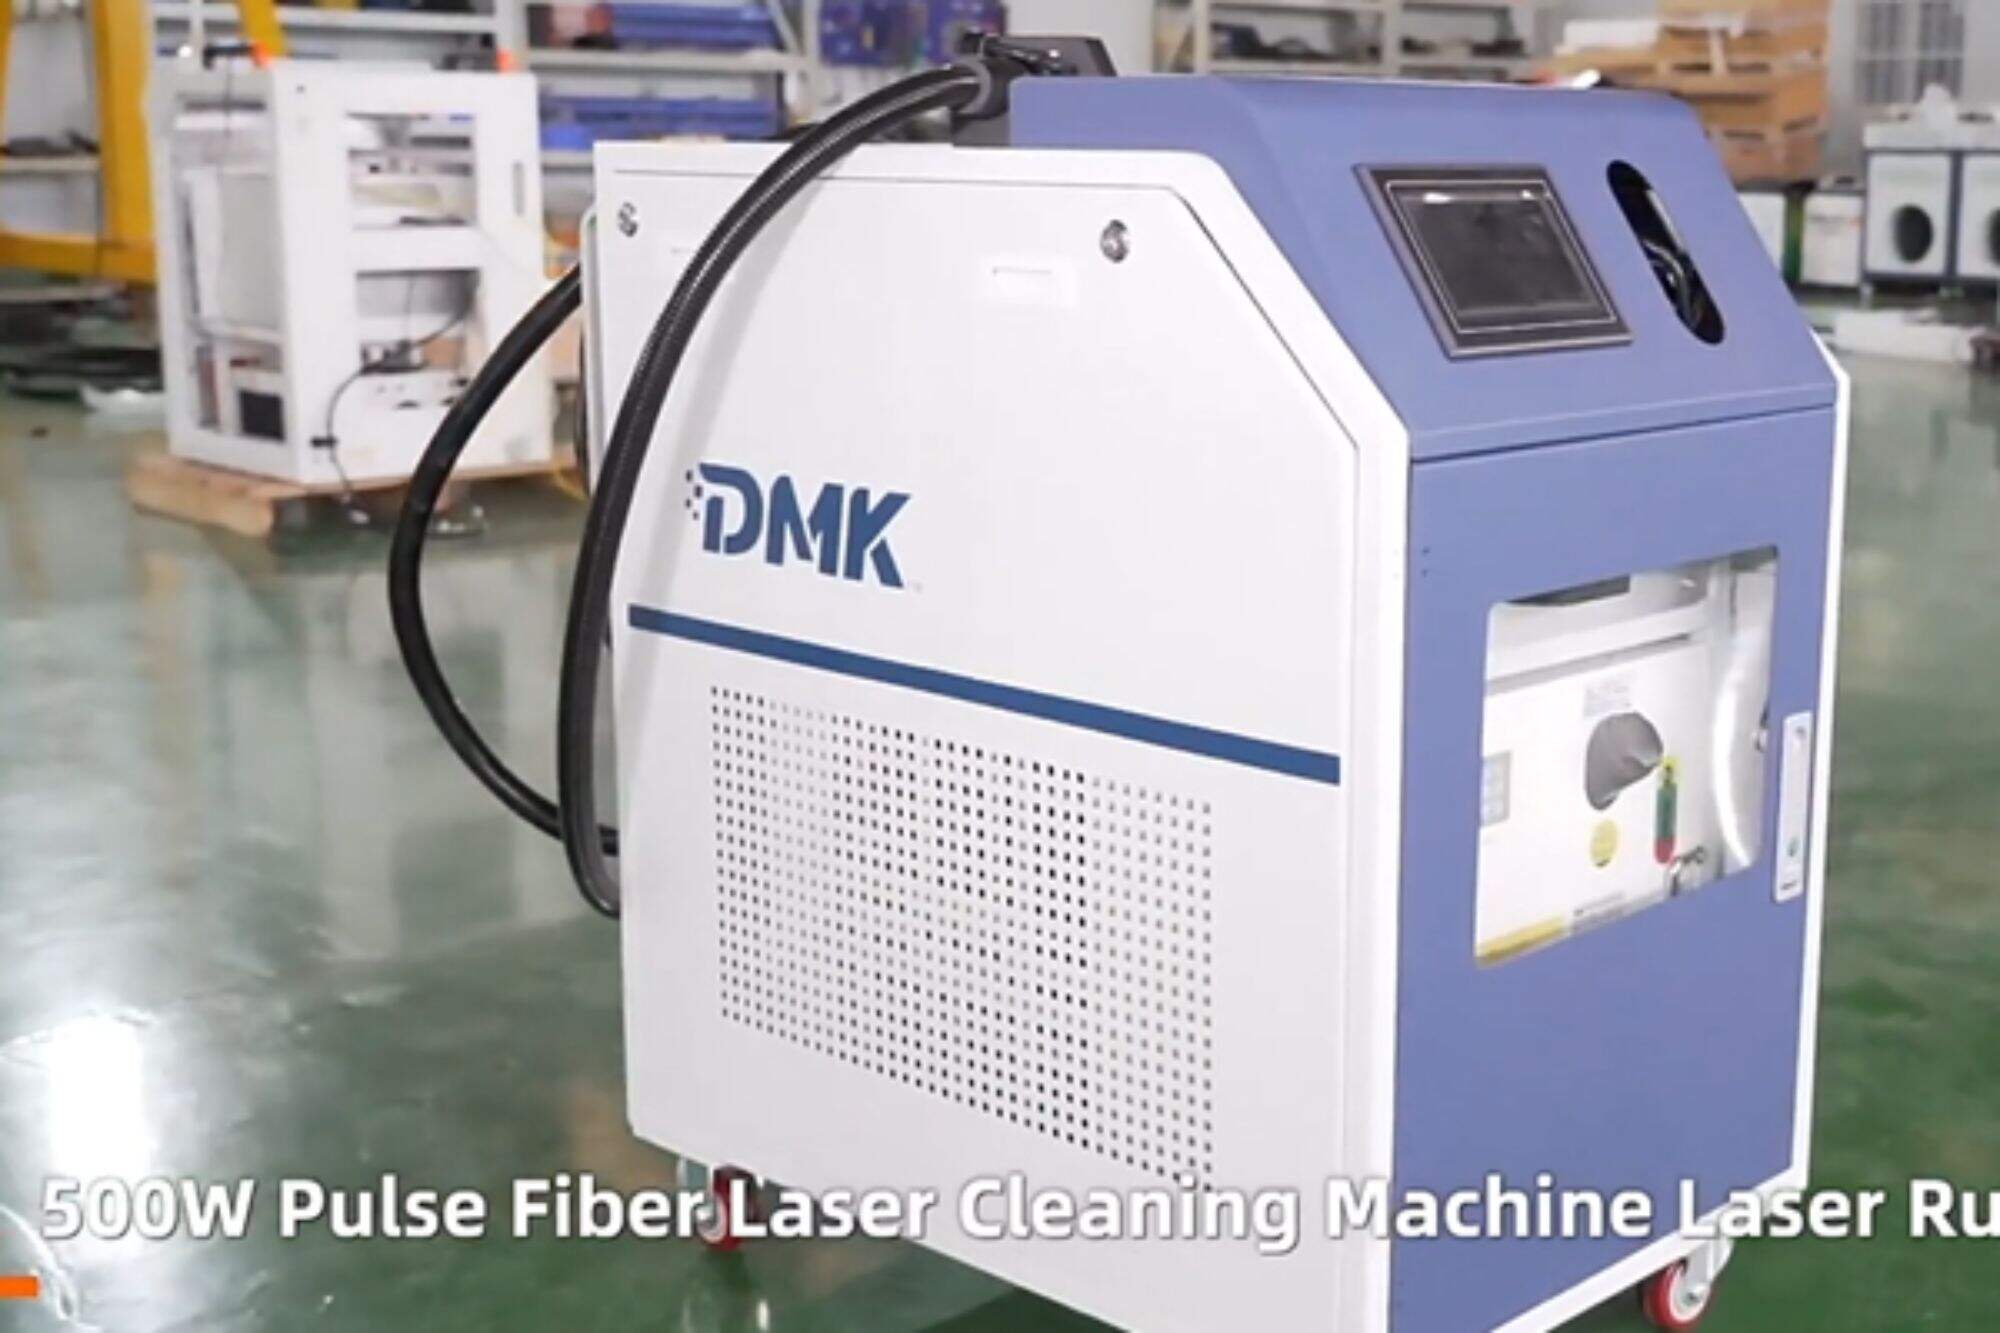 DMK 500w pulse laser cleaning machine